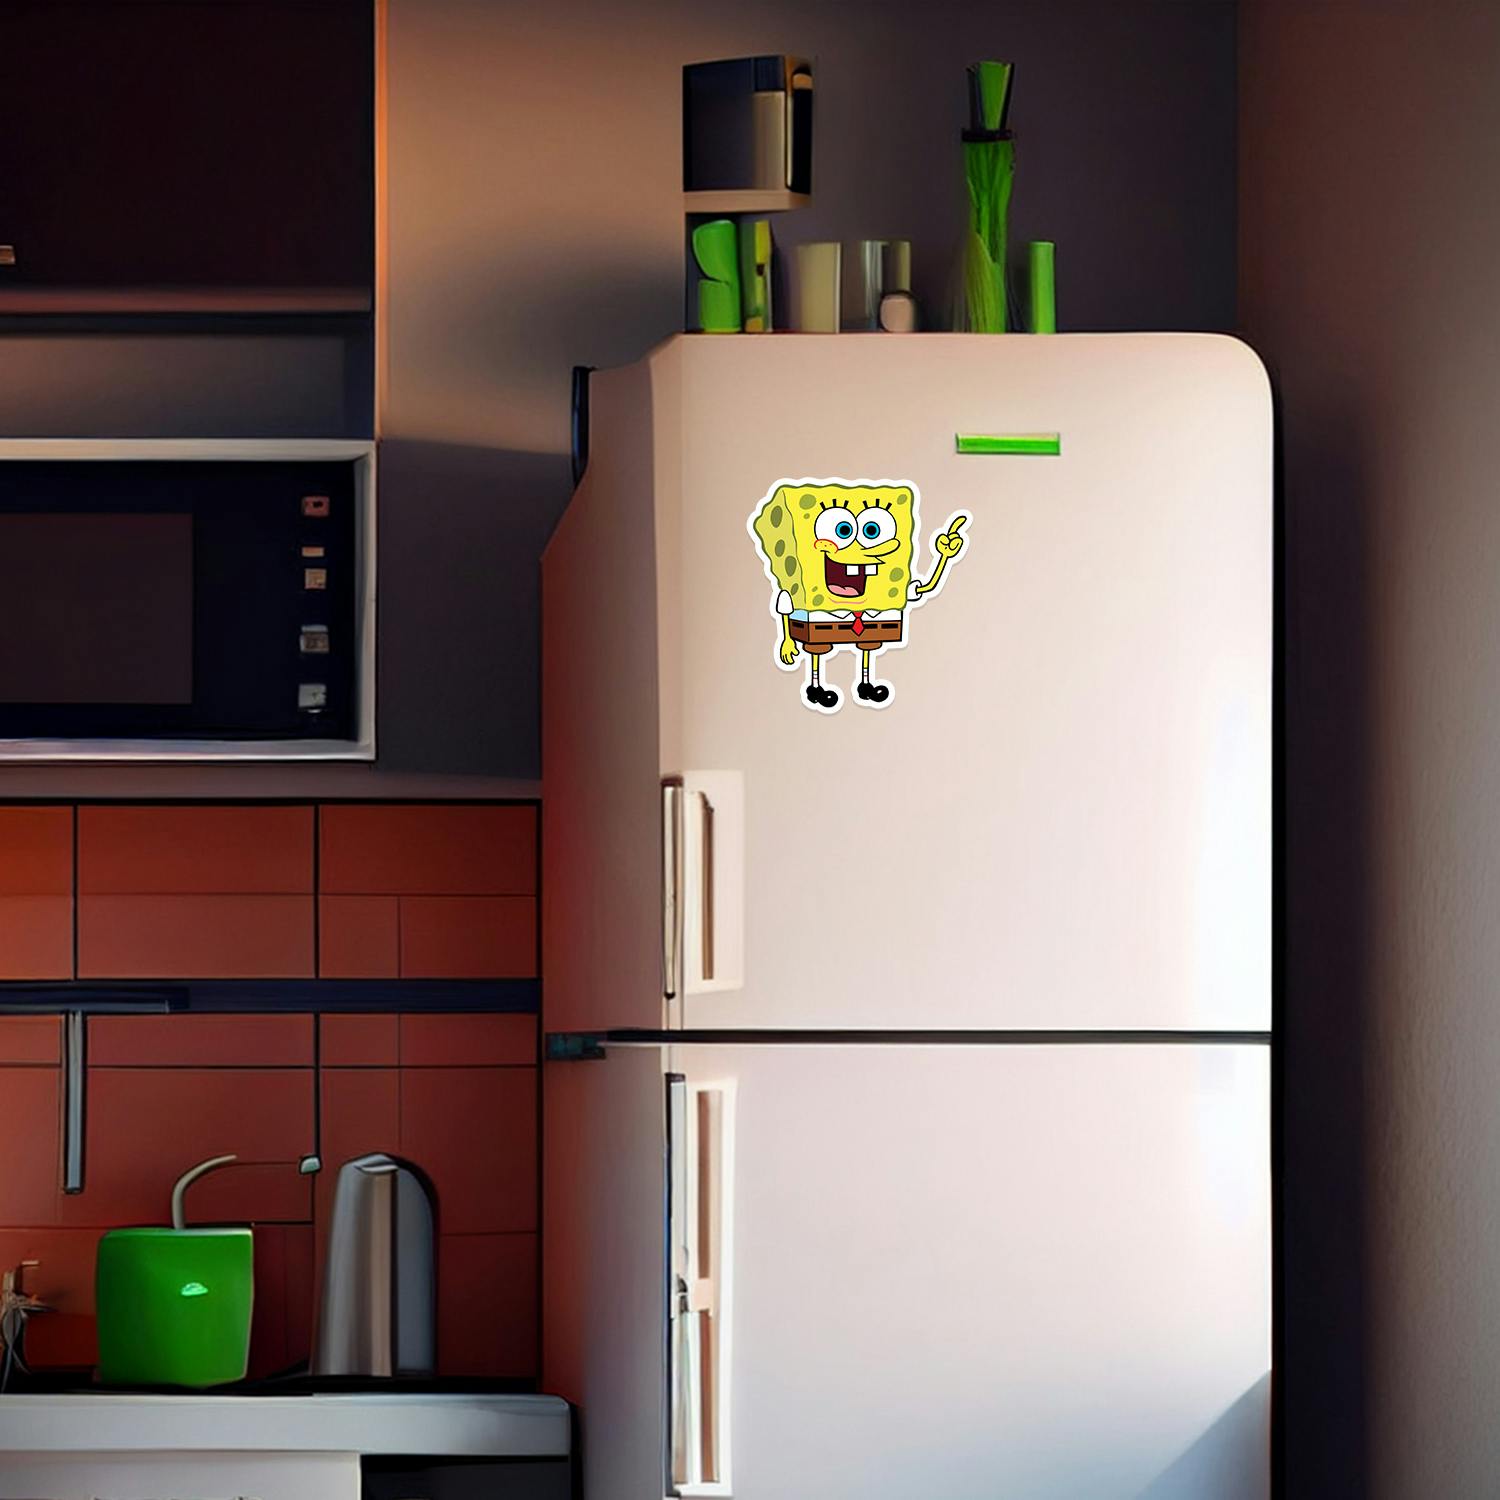 SpongeBob SquarePants Fridge Magnet - Add Some Fun to Your Kitchen!